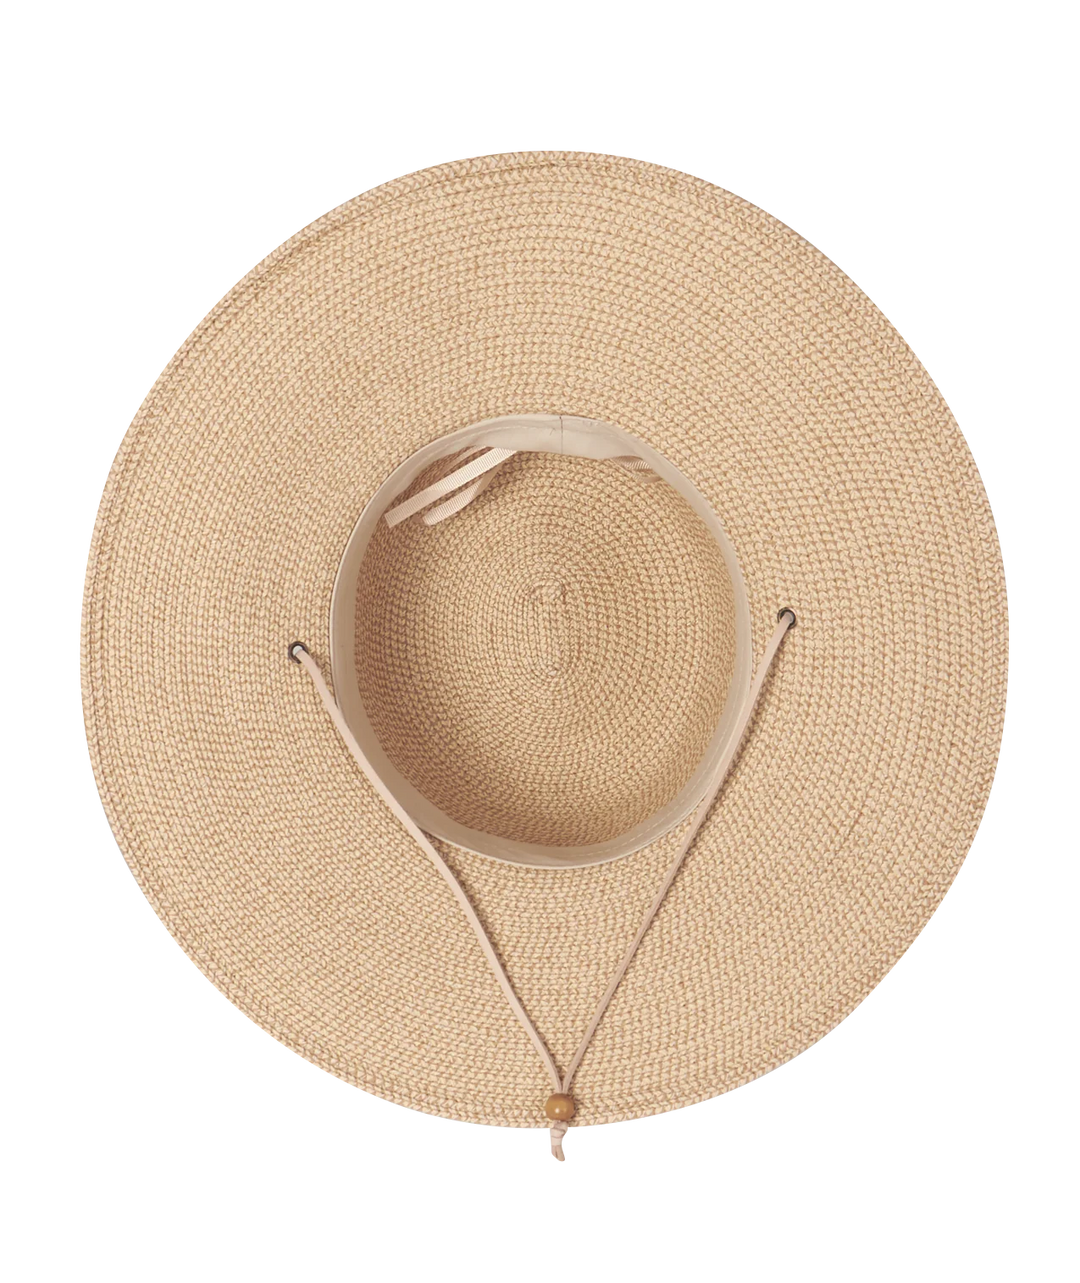 Kooringal - Genovieve Wide Brim Hat - Natural